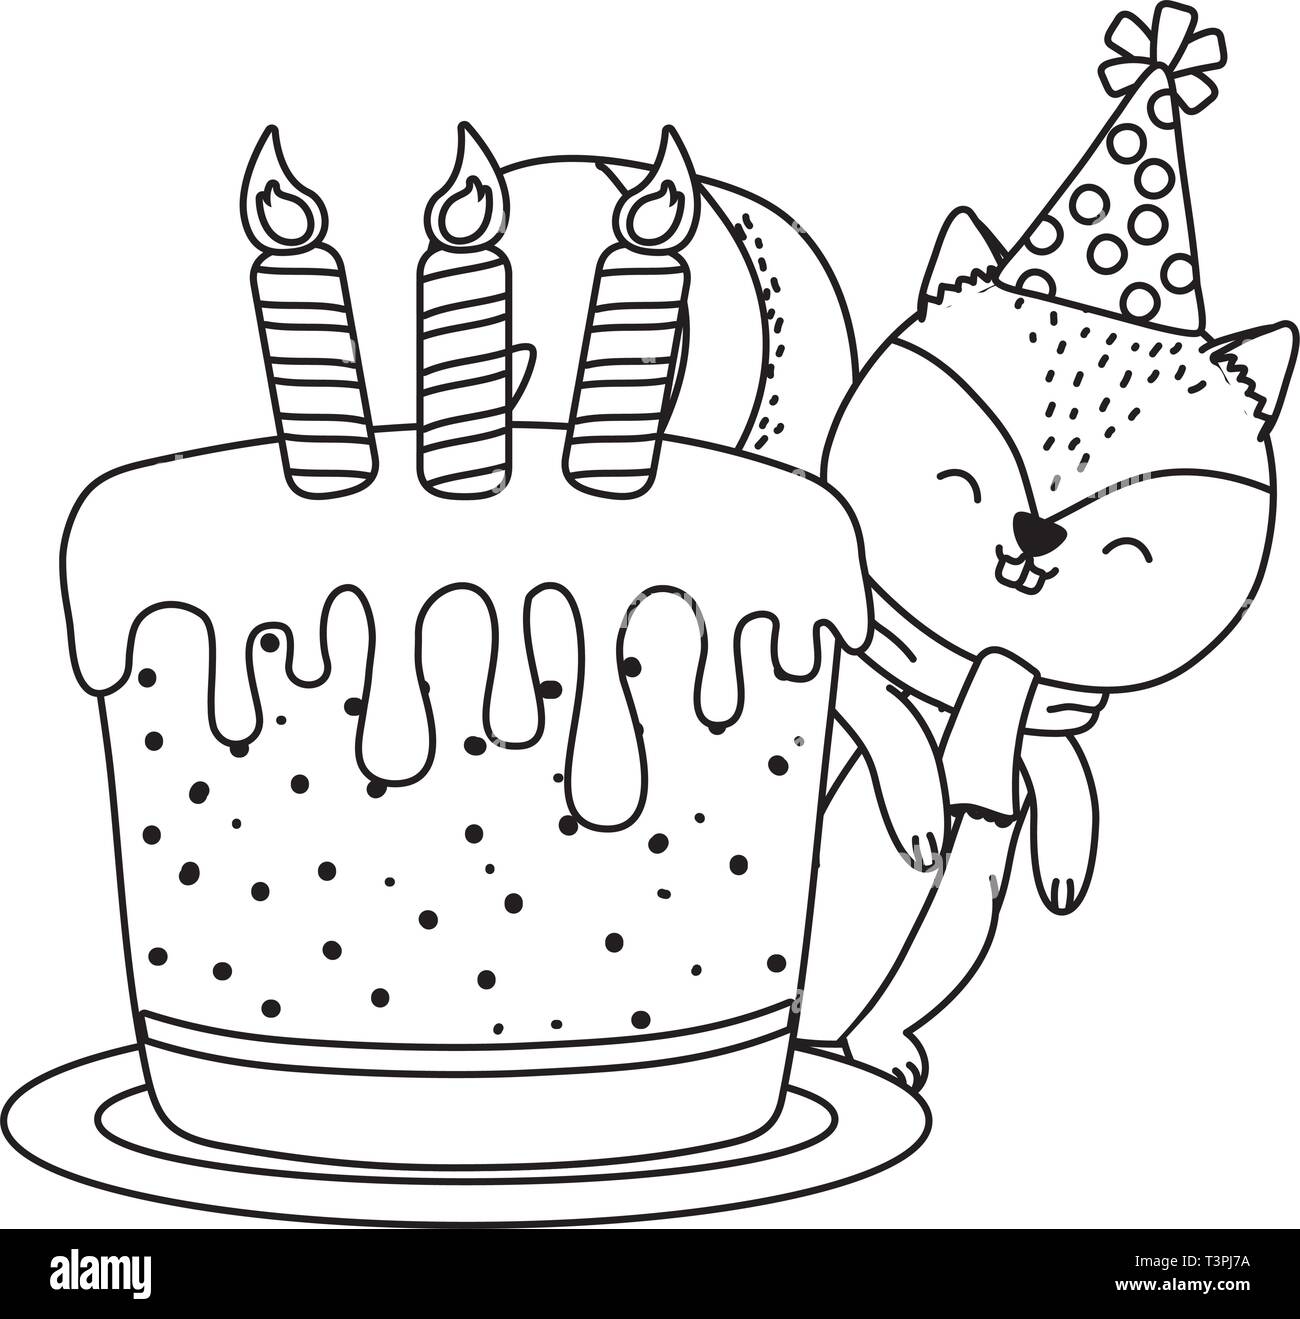 Birthday Party Vector Illustration | GraphicMama